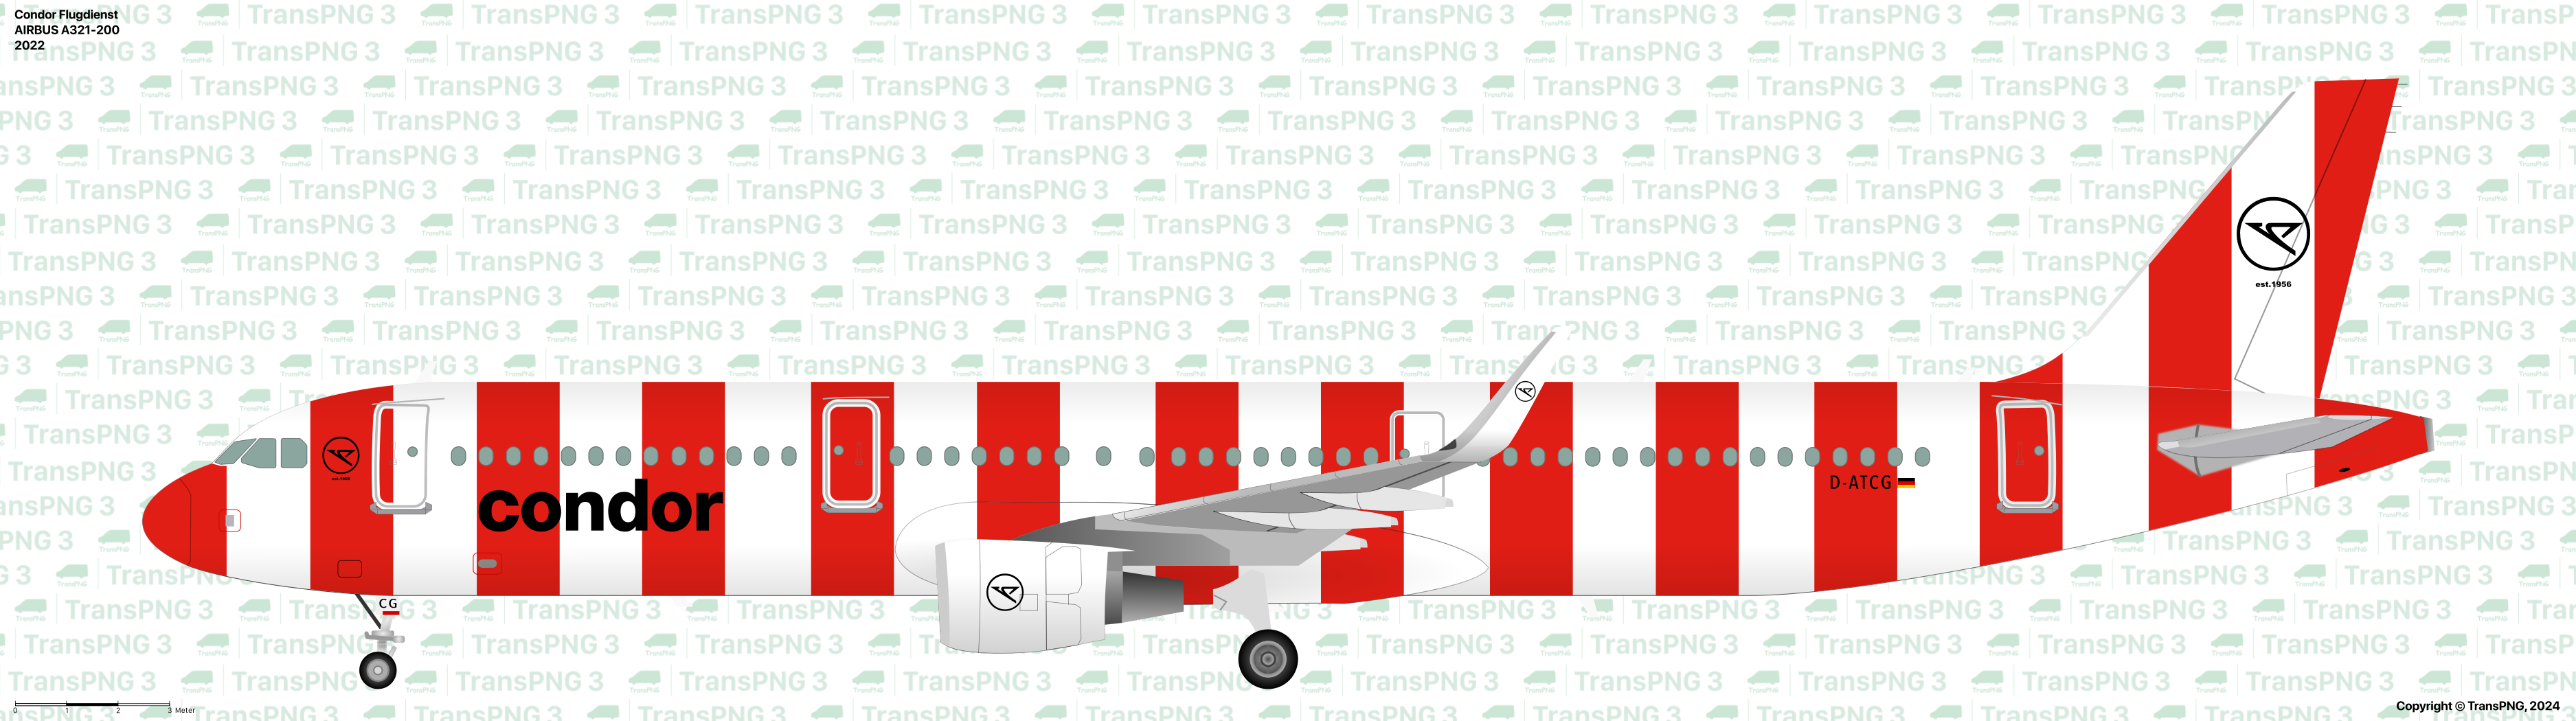 TransPNG.net | 分享世界各地多種交通工具的優秀繪圖 - 客機 53481877744_2b87aac71d_o